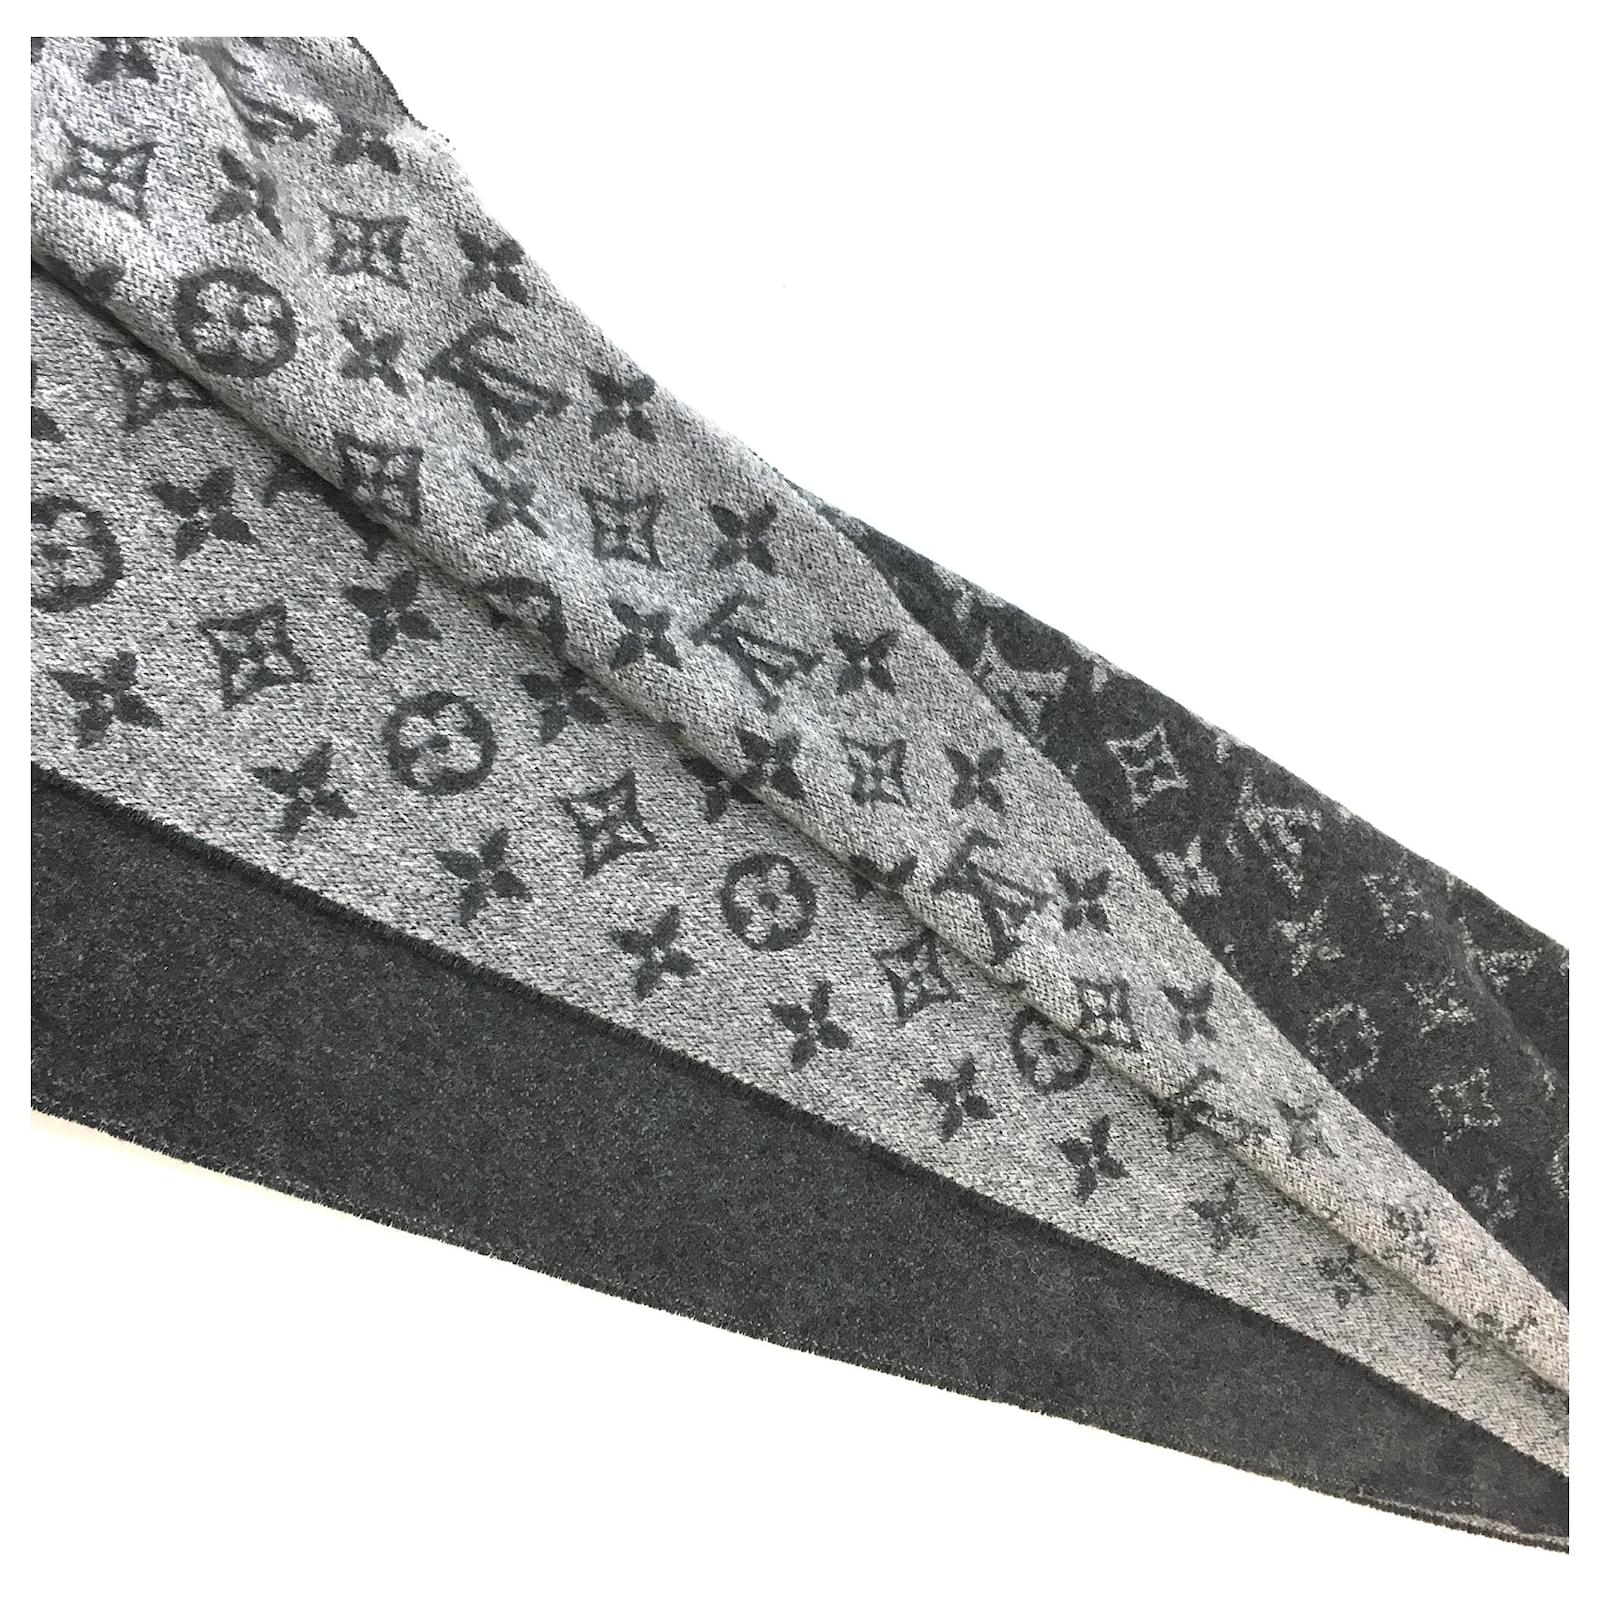 Louis Vuitton Grey Monogram Cozy 50% wool 50% Cashmere Scarf/Wrap